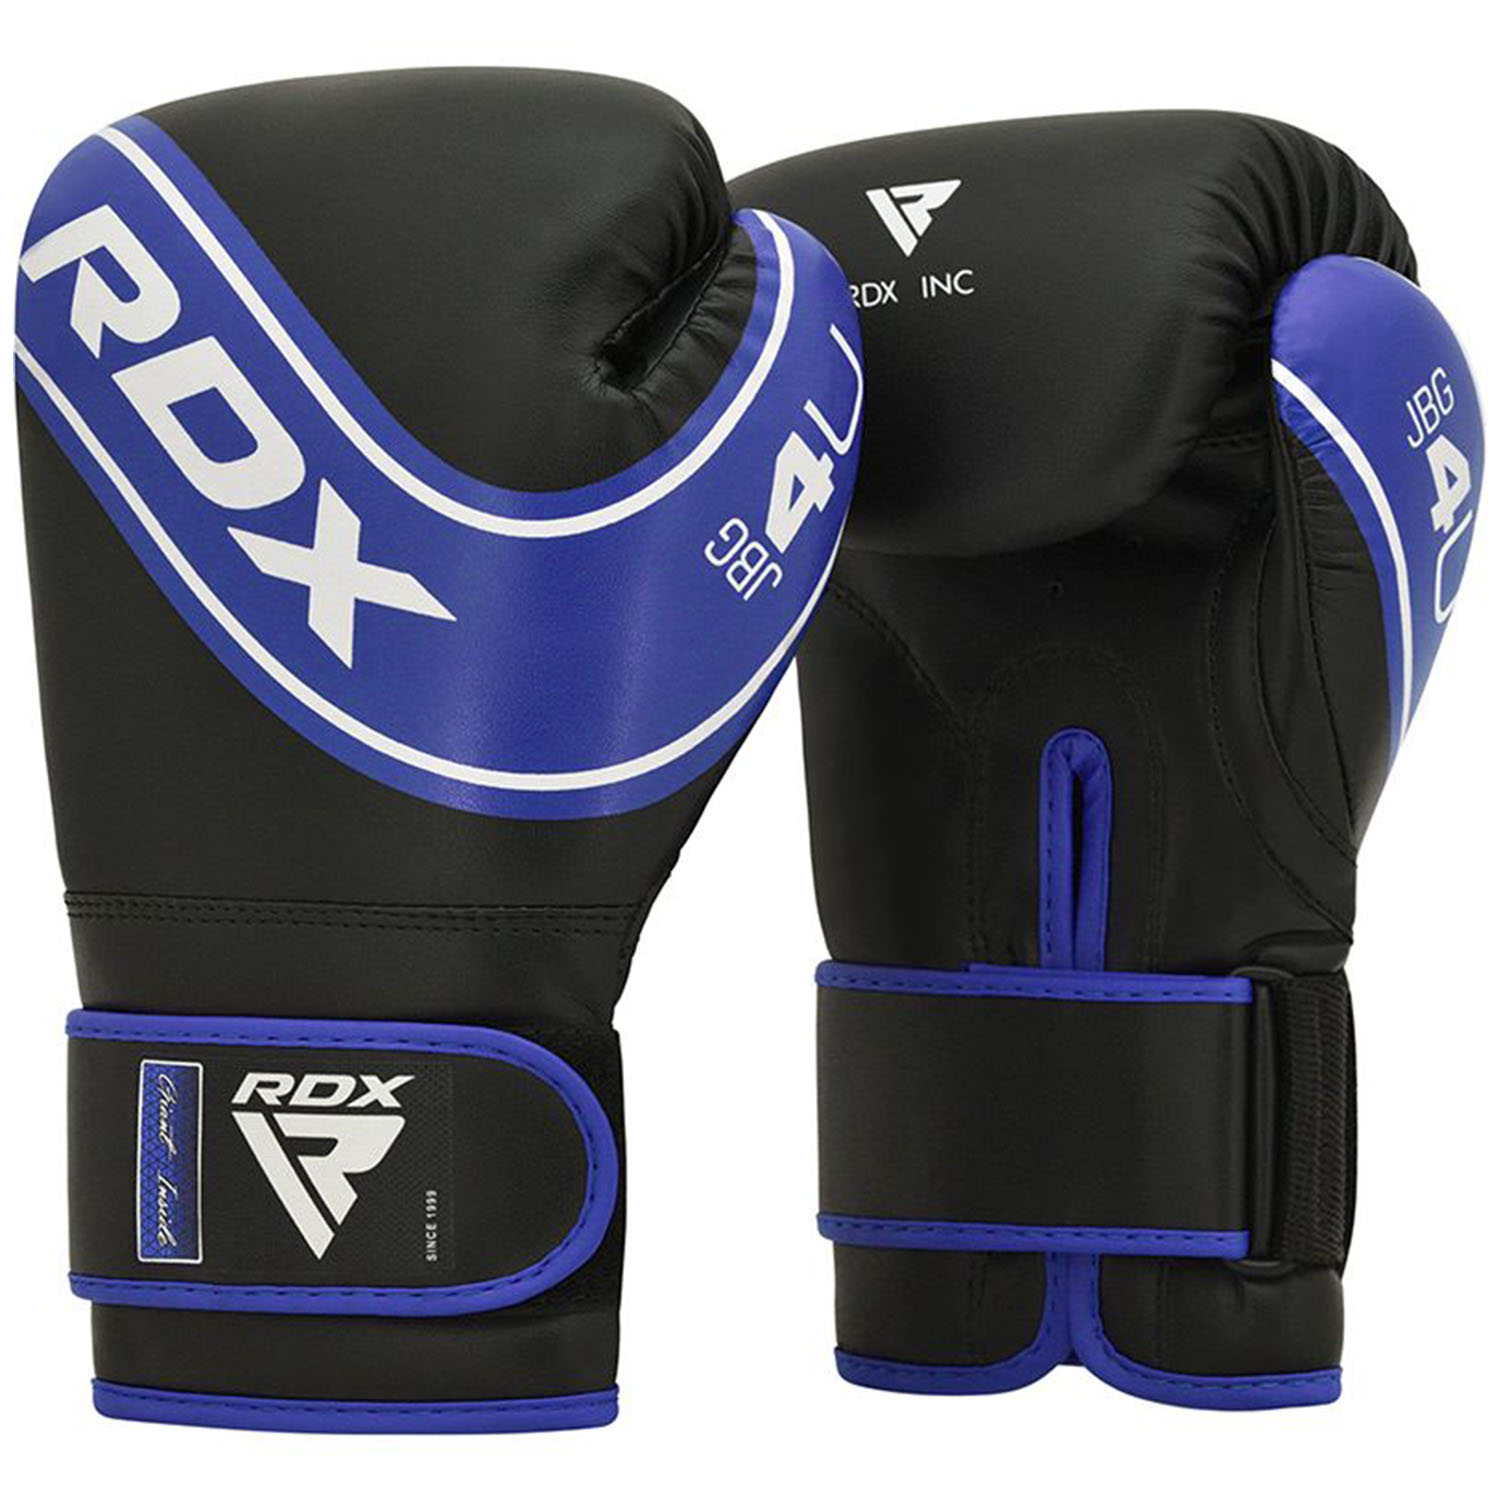 RDX Boxhandschuhe, Kinder, 4B, schwarz-blau